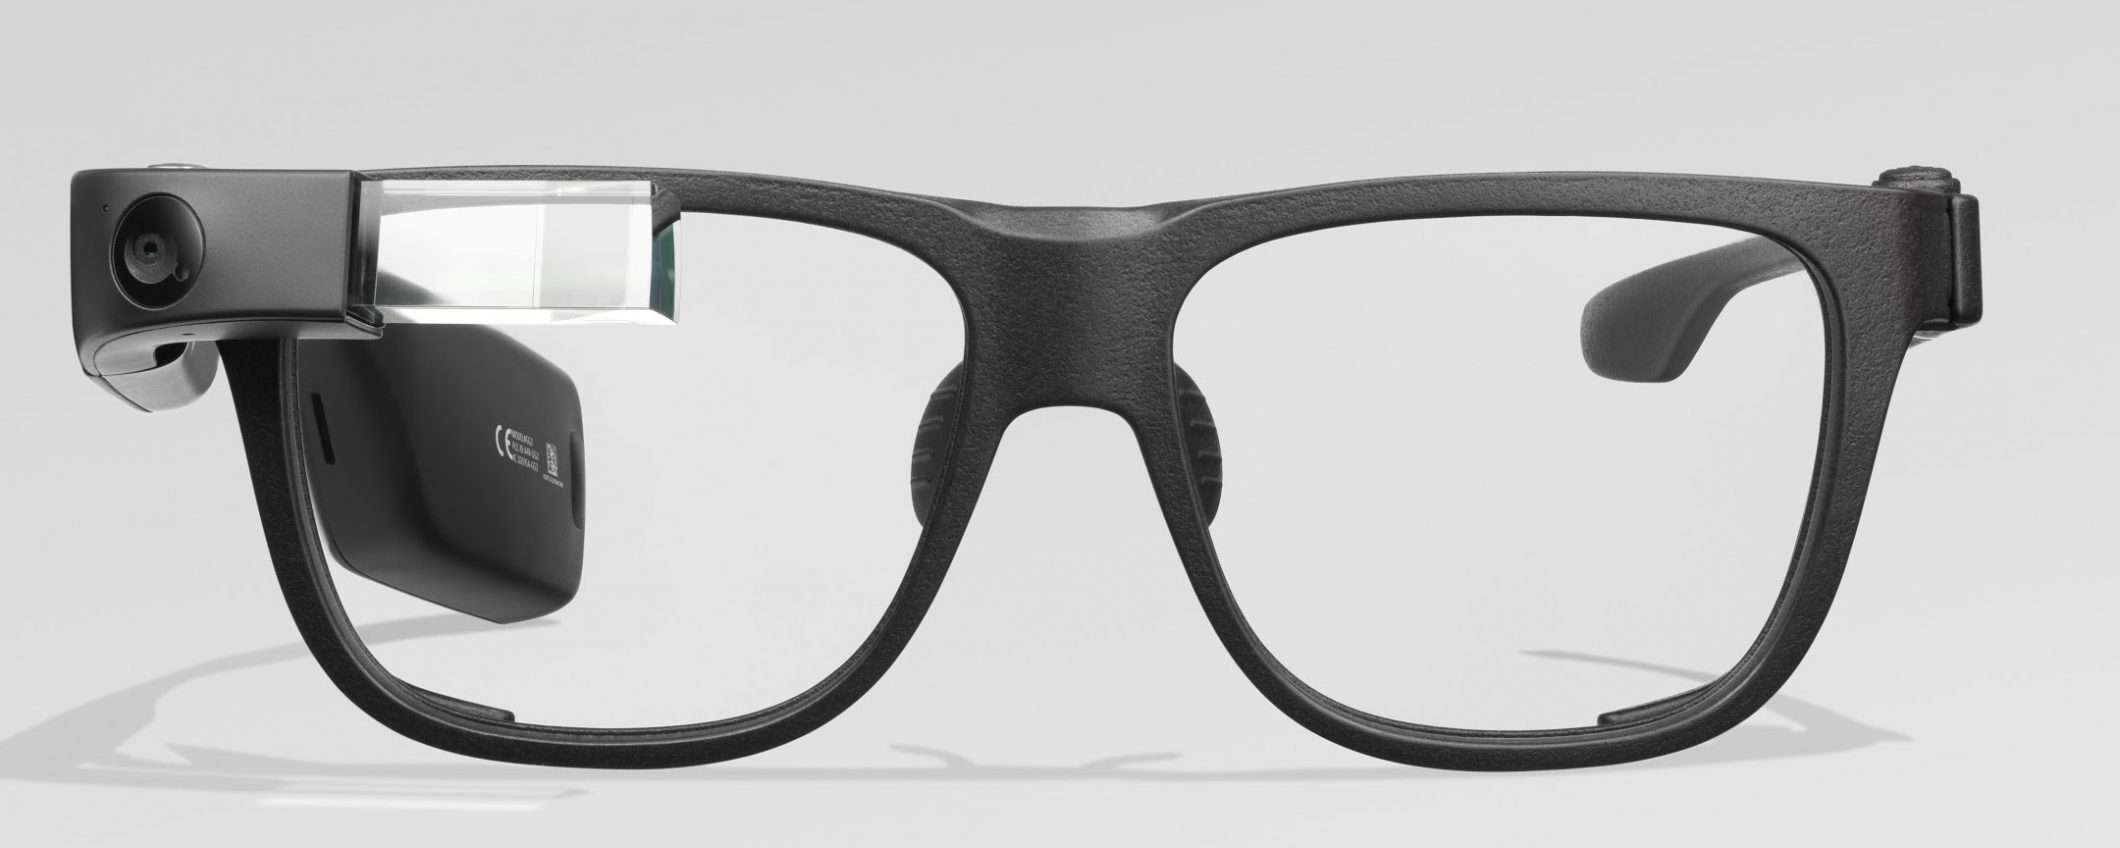 Google Glass Enterprise Edition 2: 999 dollari